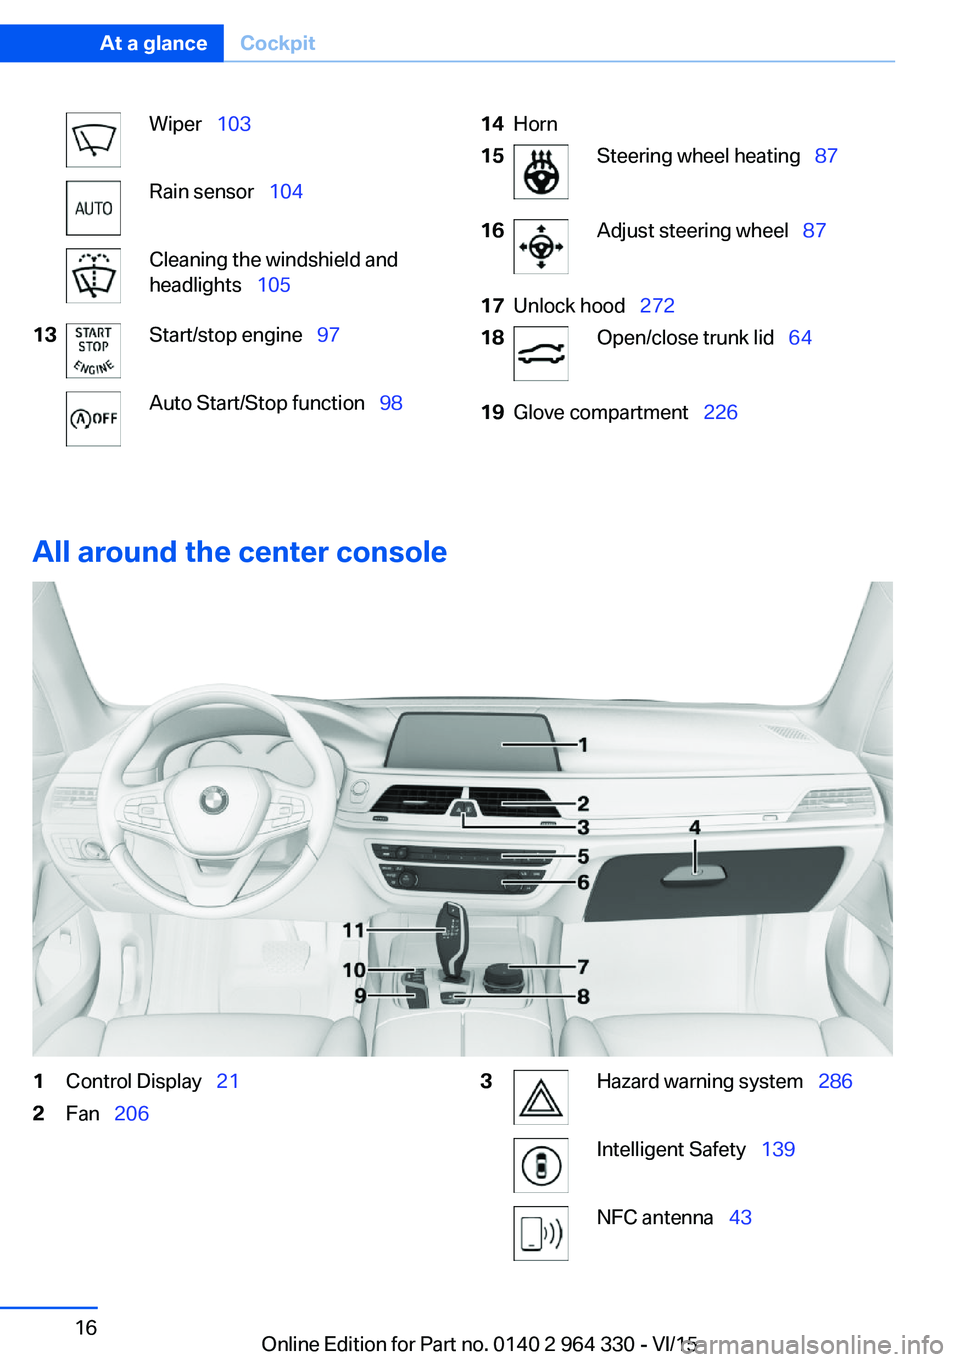 BMW 740LI XDRIVE SEDAN 2015  Owners Manual Wiper  103Rain sensor   104Cleaning the windshield and
headlights   10513Start/stop engine   97Auto Start/Stop function   9814Horn15Steering wheel heating  8716Adjust steering 